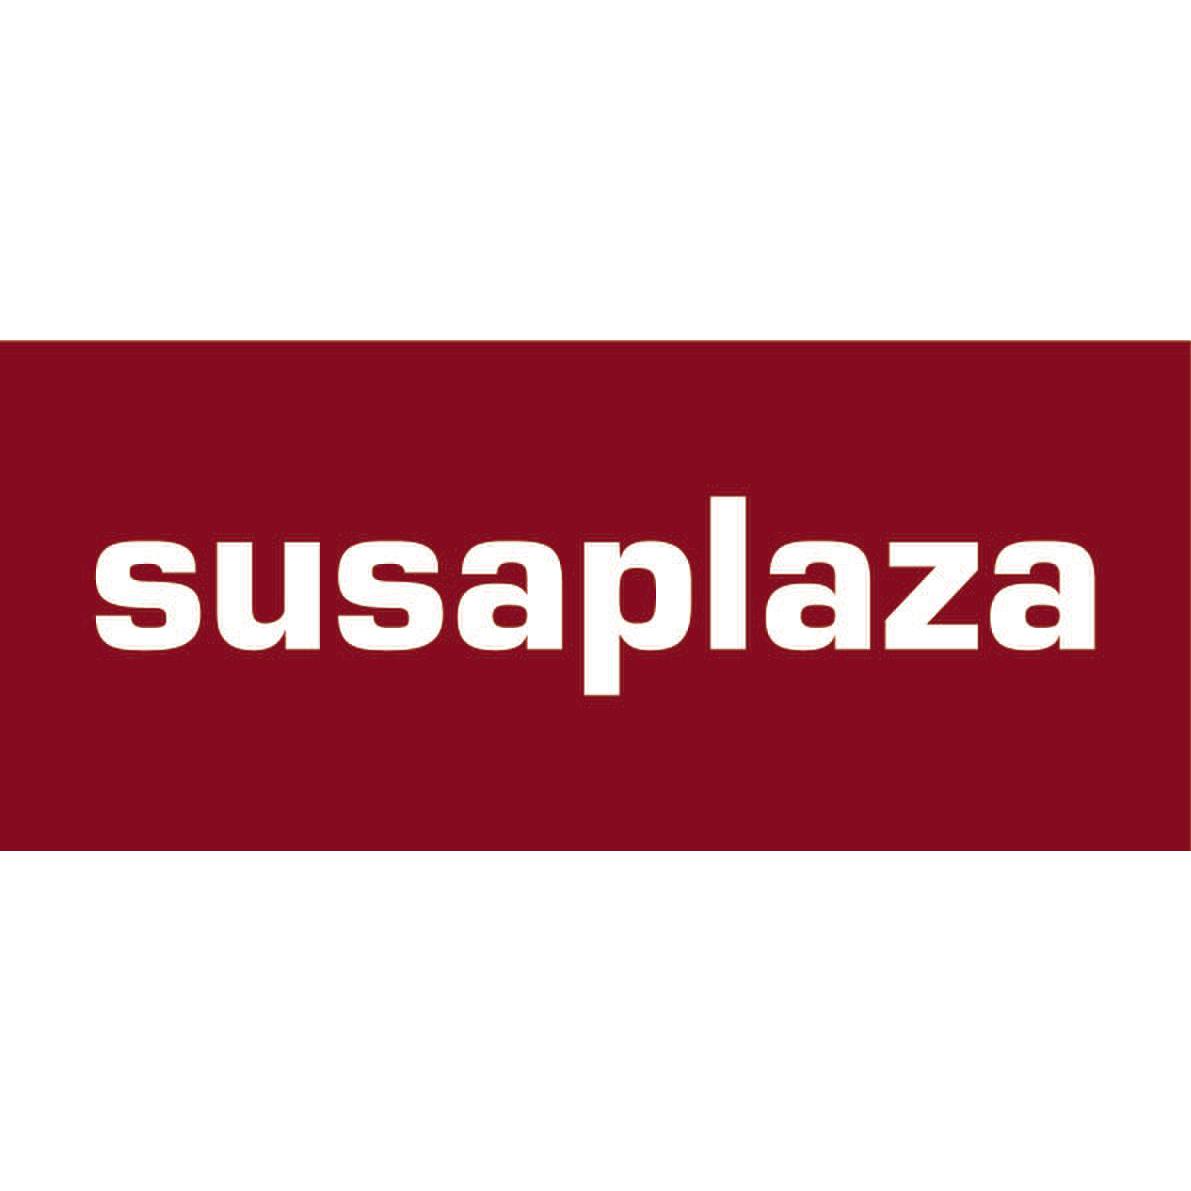 Susa Plaza Logo